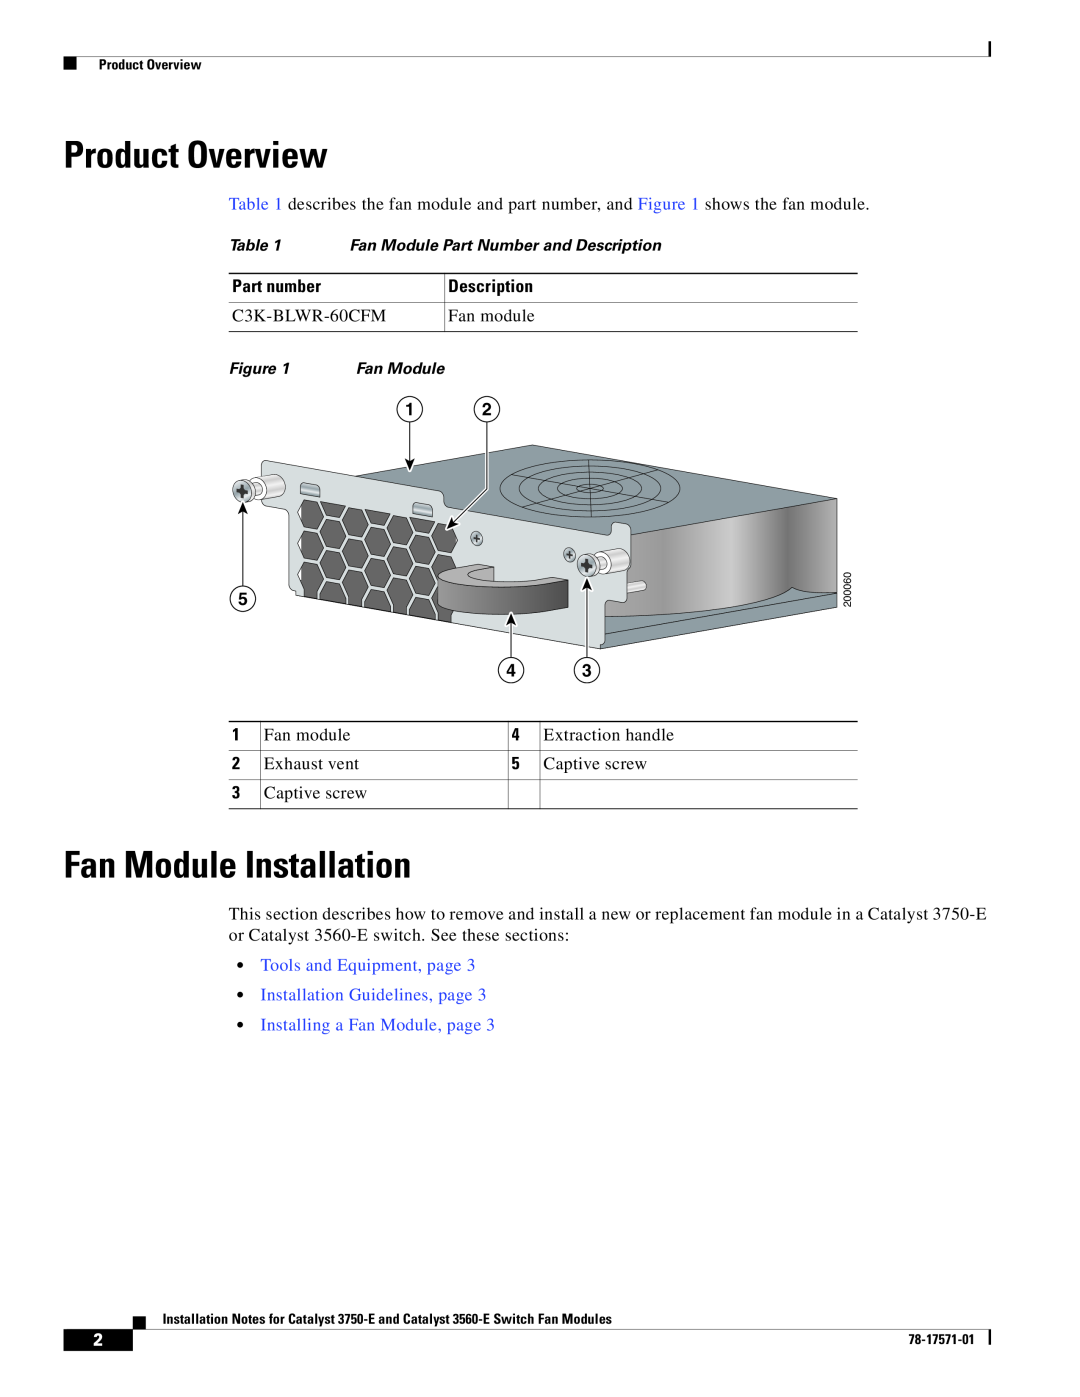 Cisco Systems Catalyst 3560-E Product Overview, Fan Module Installation, Installing a Fan Module, page, C3K-BLWR-60CFM 